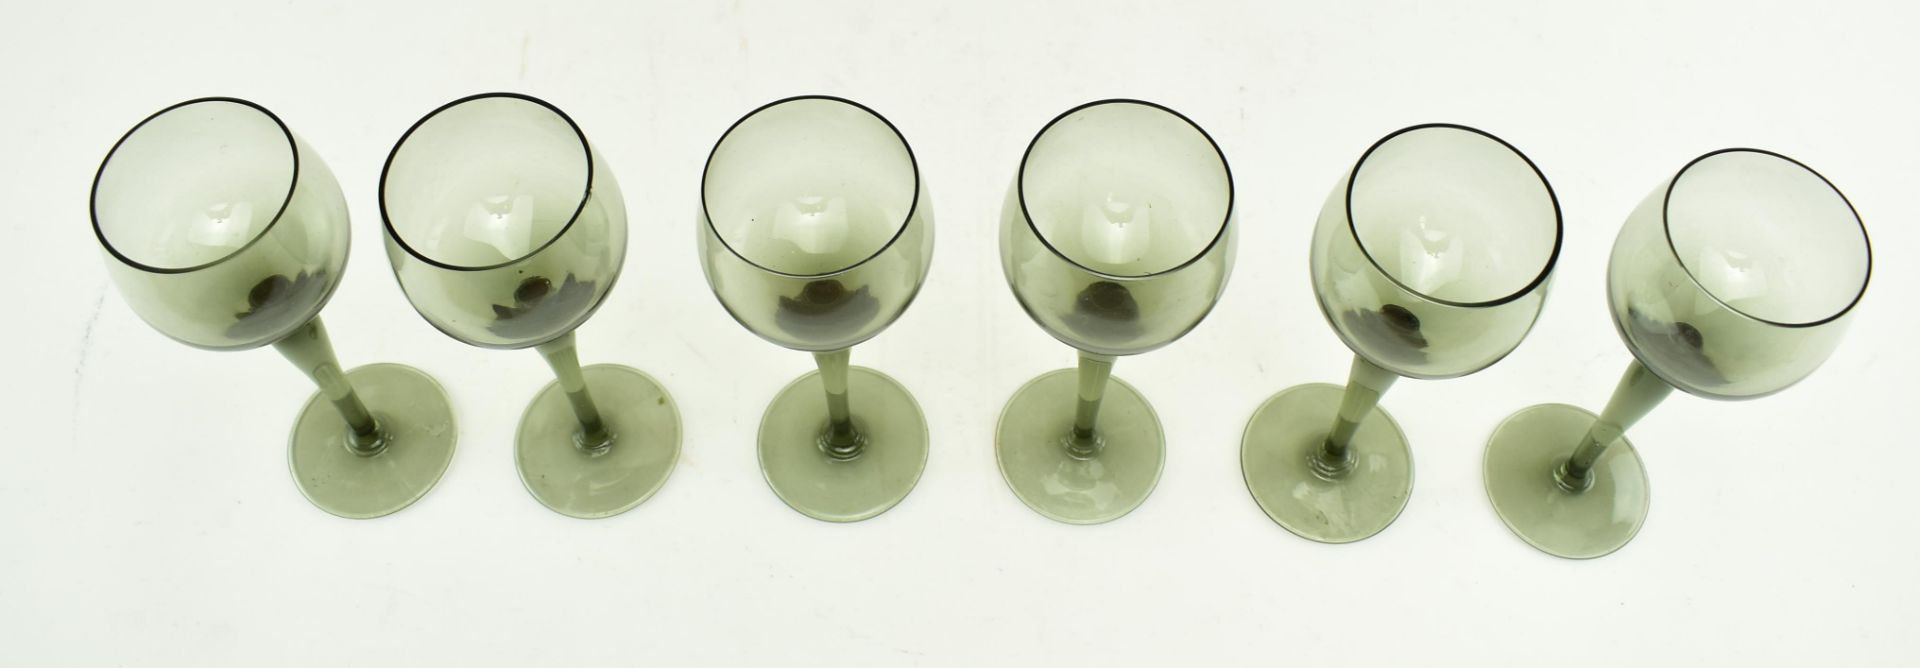 SIX SMOKED GREY GLASS WINE GLASSES & MATCHED PITCHER JUG - Image 7 of 8